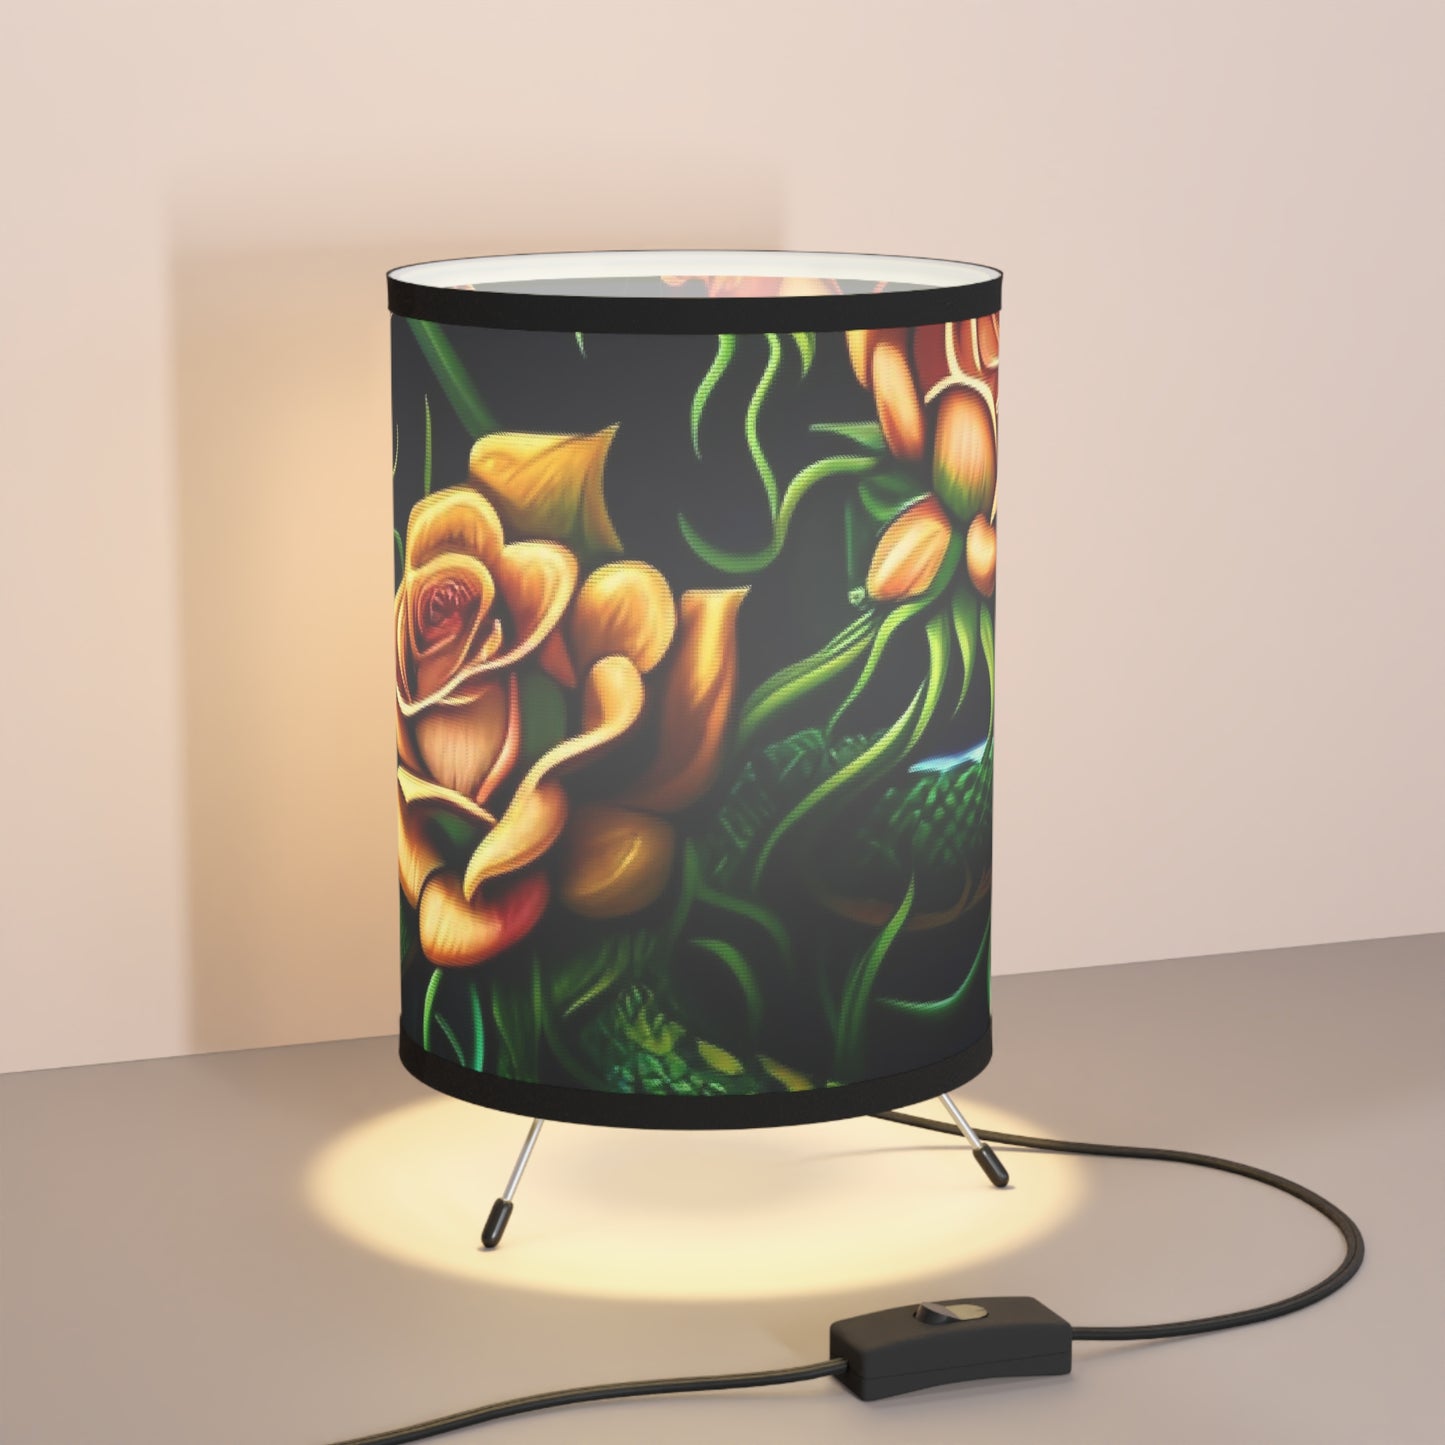 Tripod Lamp with High-Res Printed Shade, US\CA plug